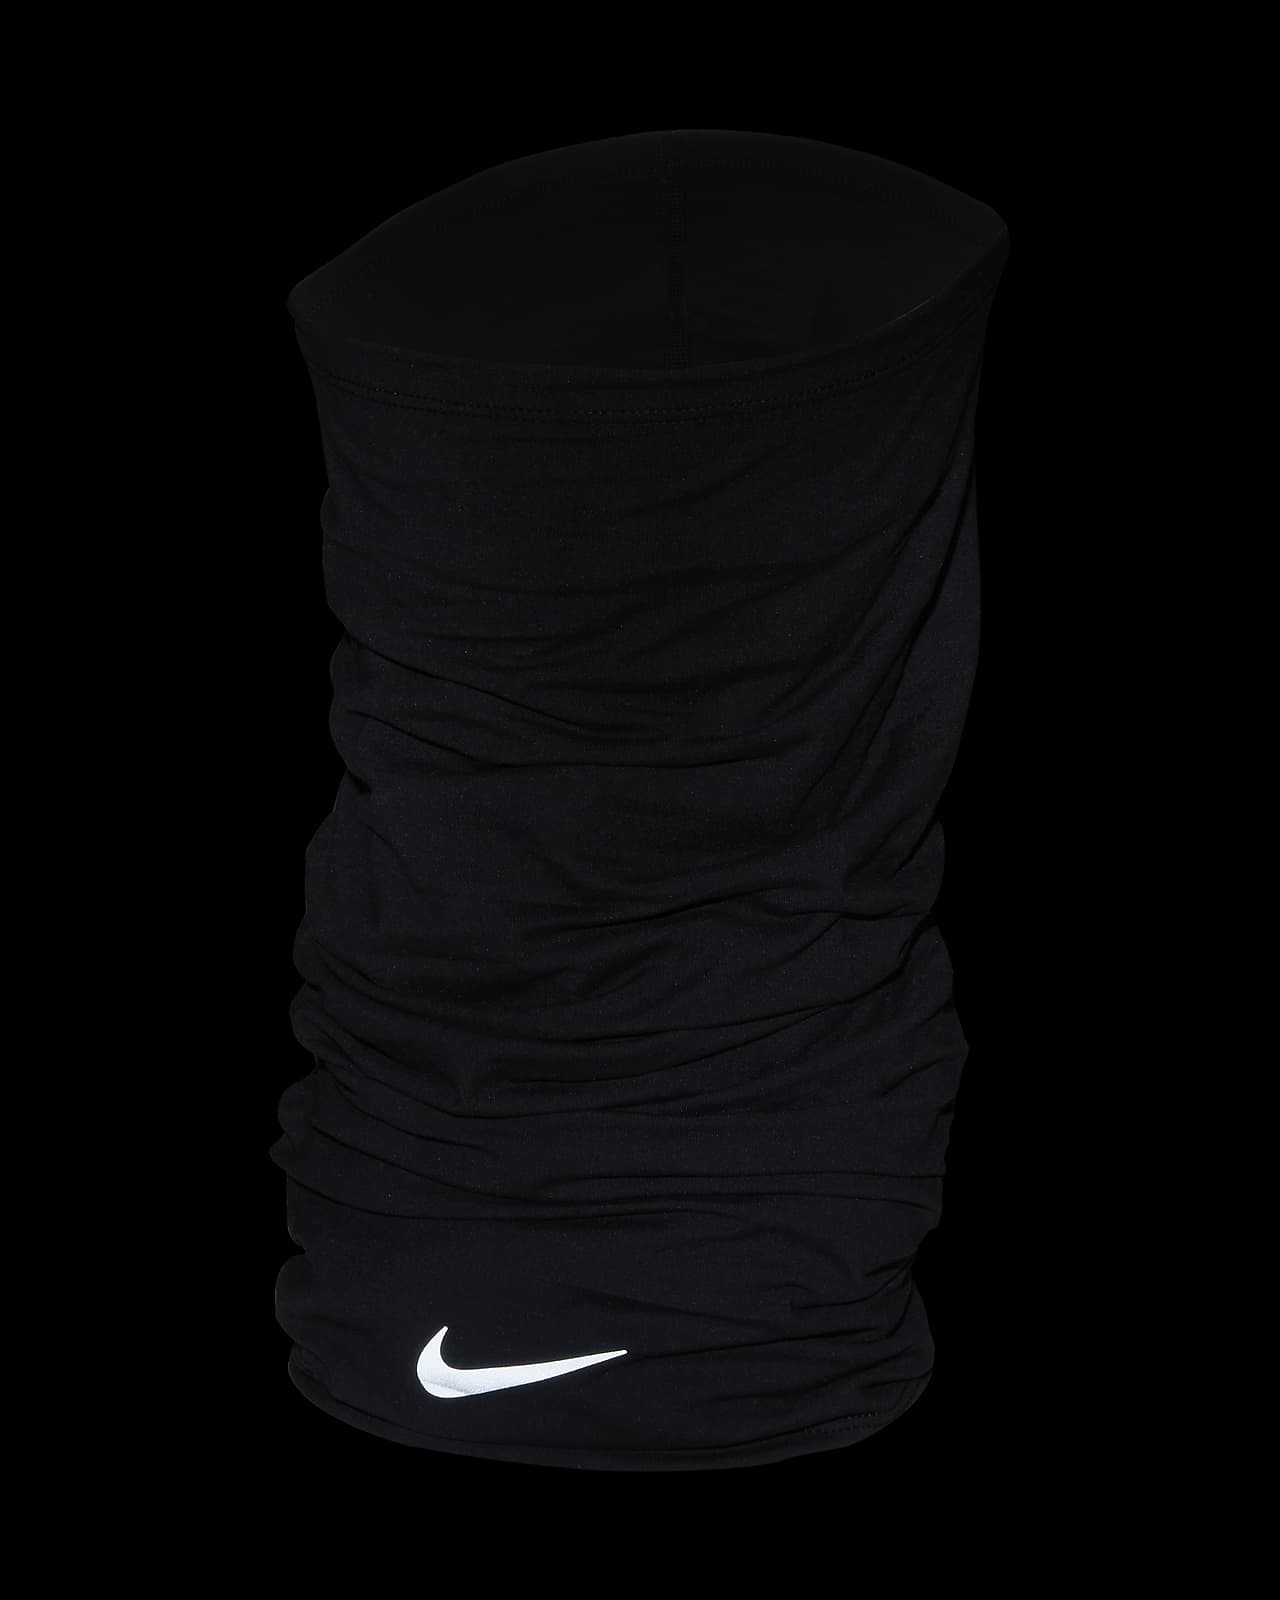 Tour de cou Nike Neck Wrap Air blanc